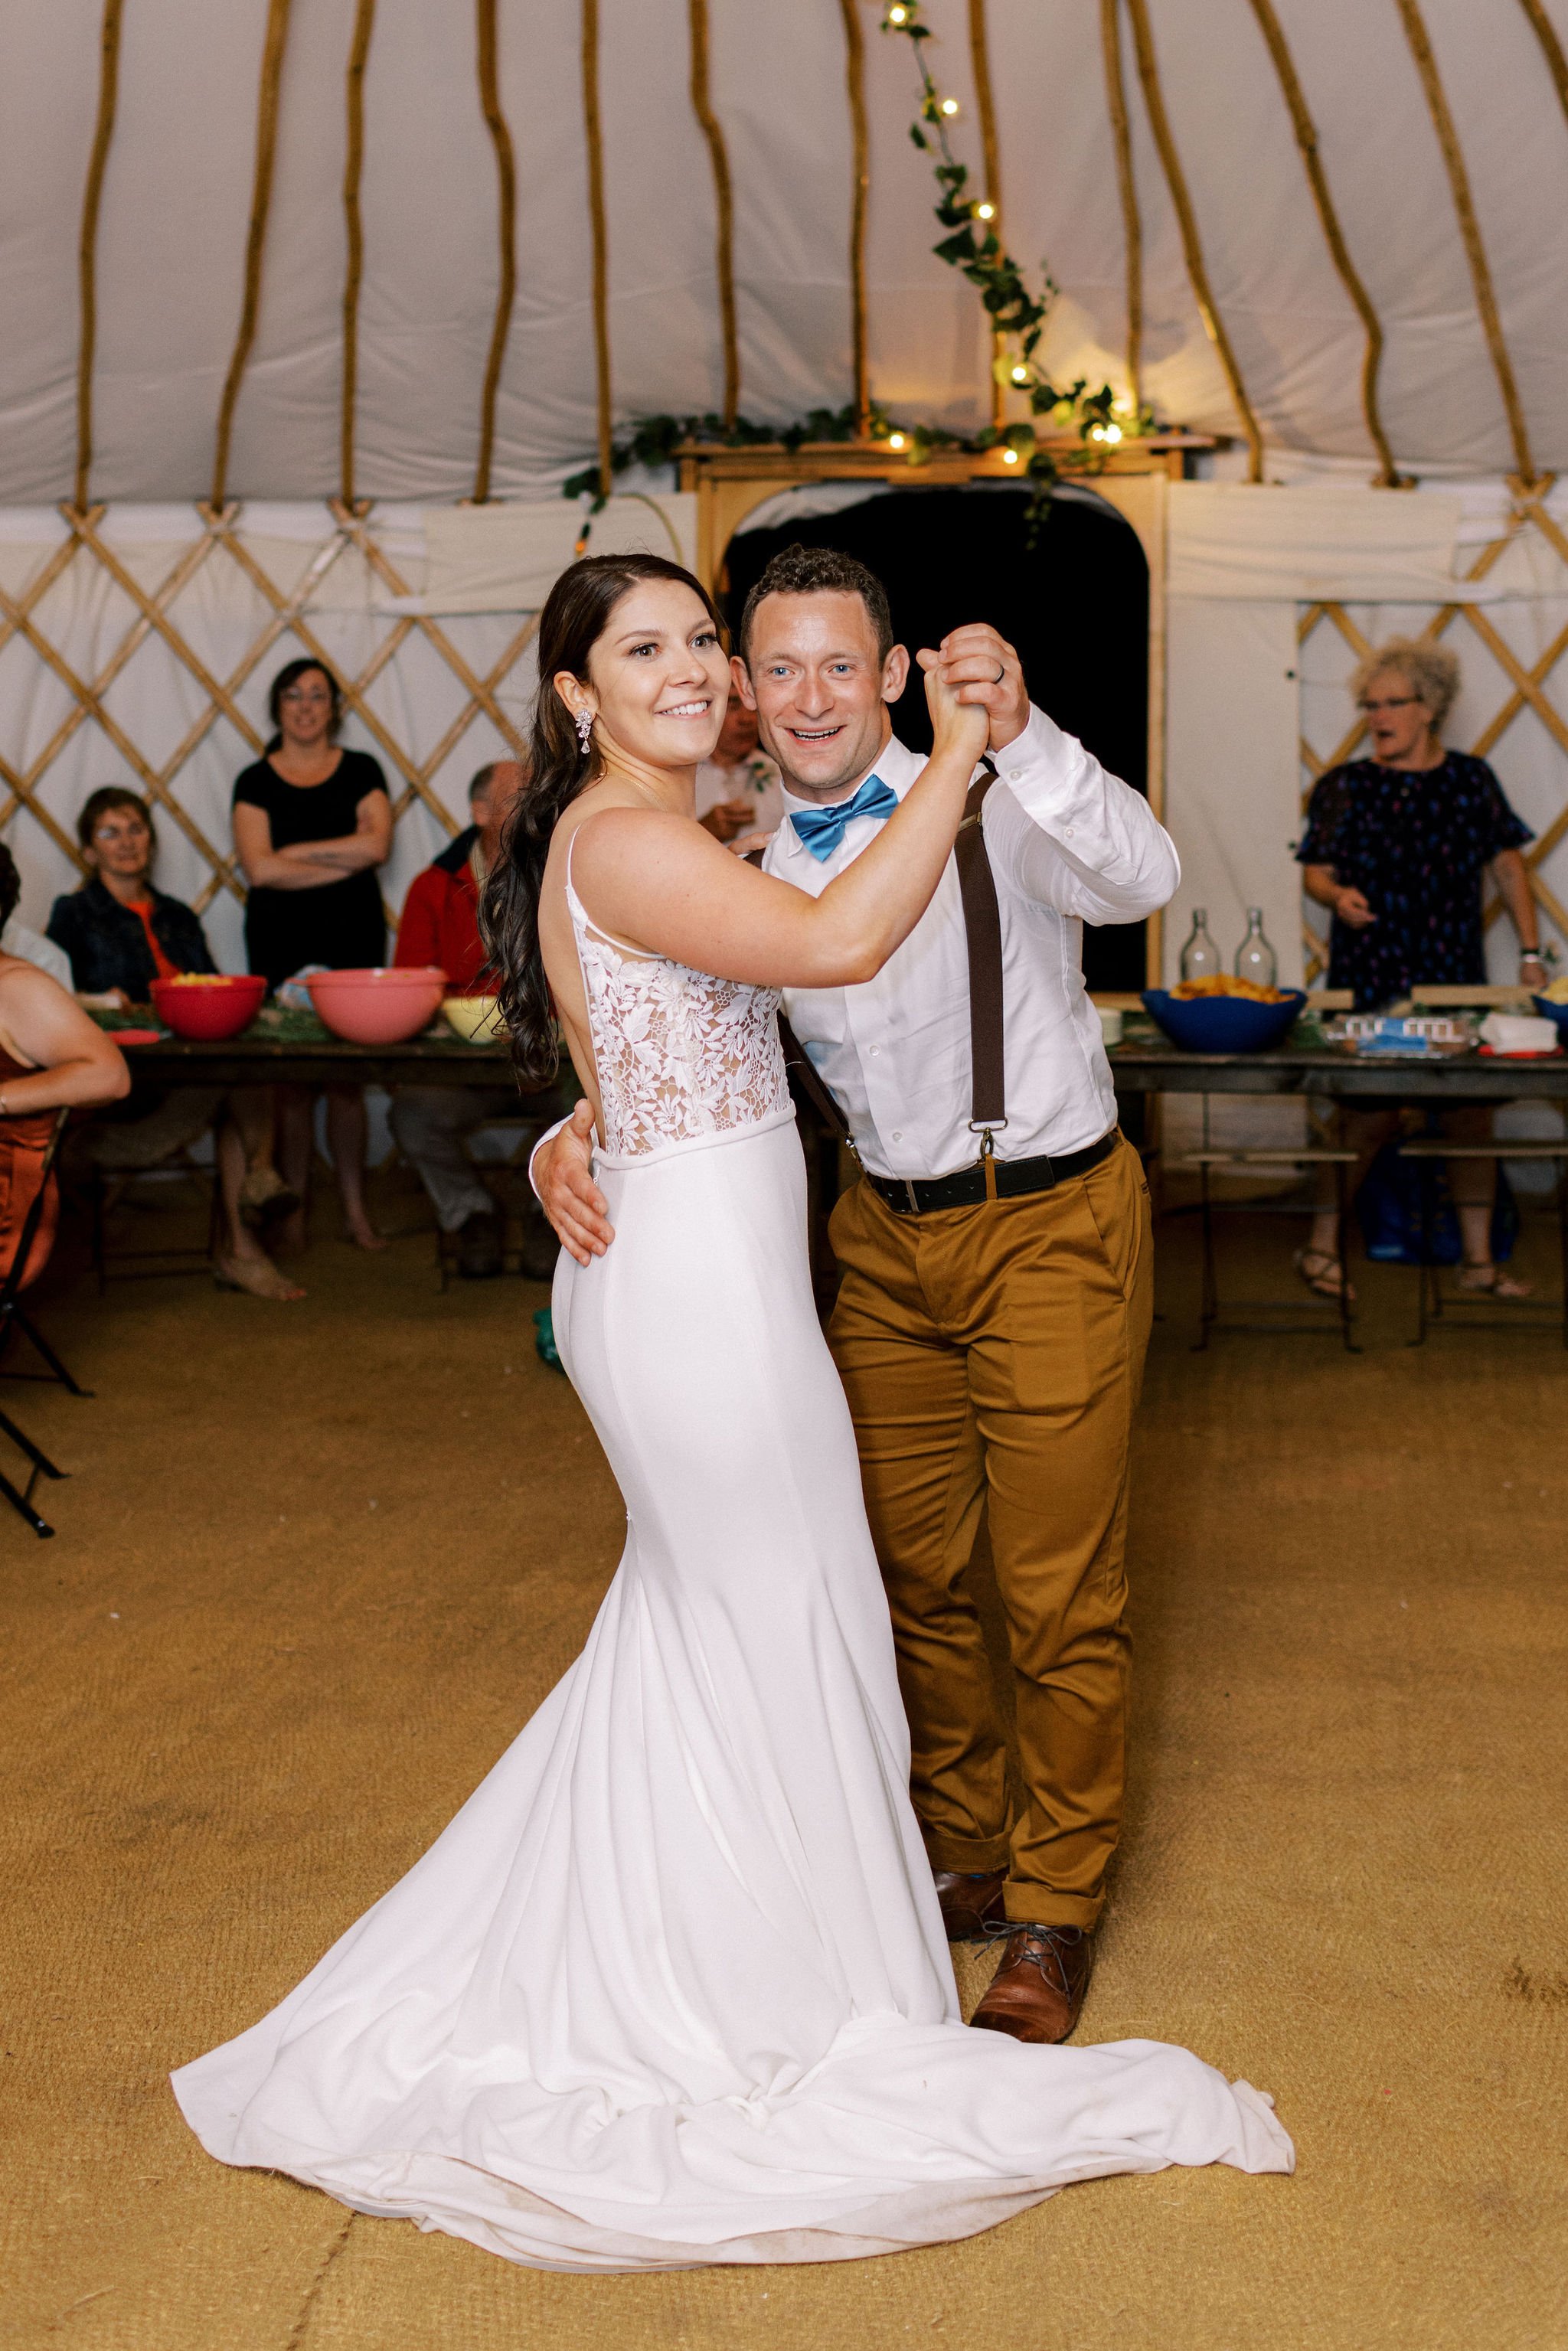 yurt-tent-rental-nova-scotia-happy-couple-dancing.jpg